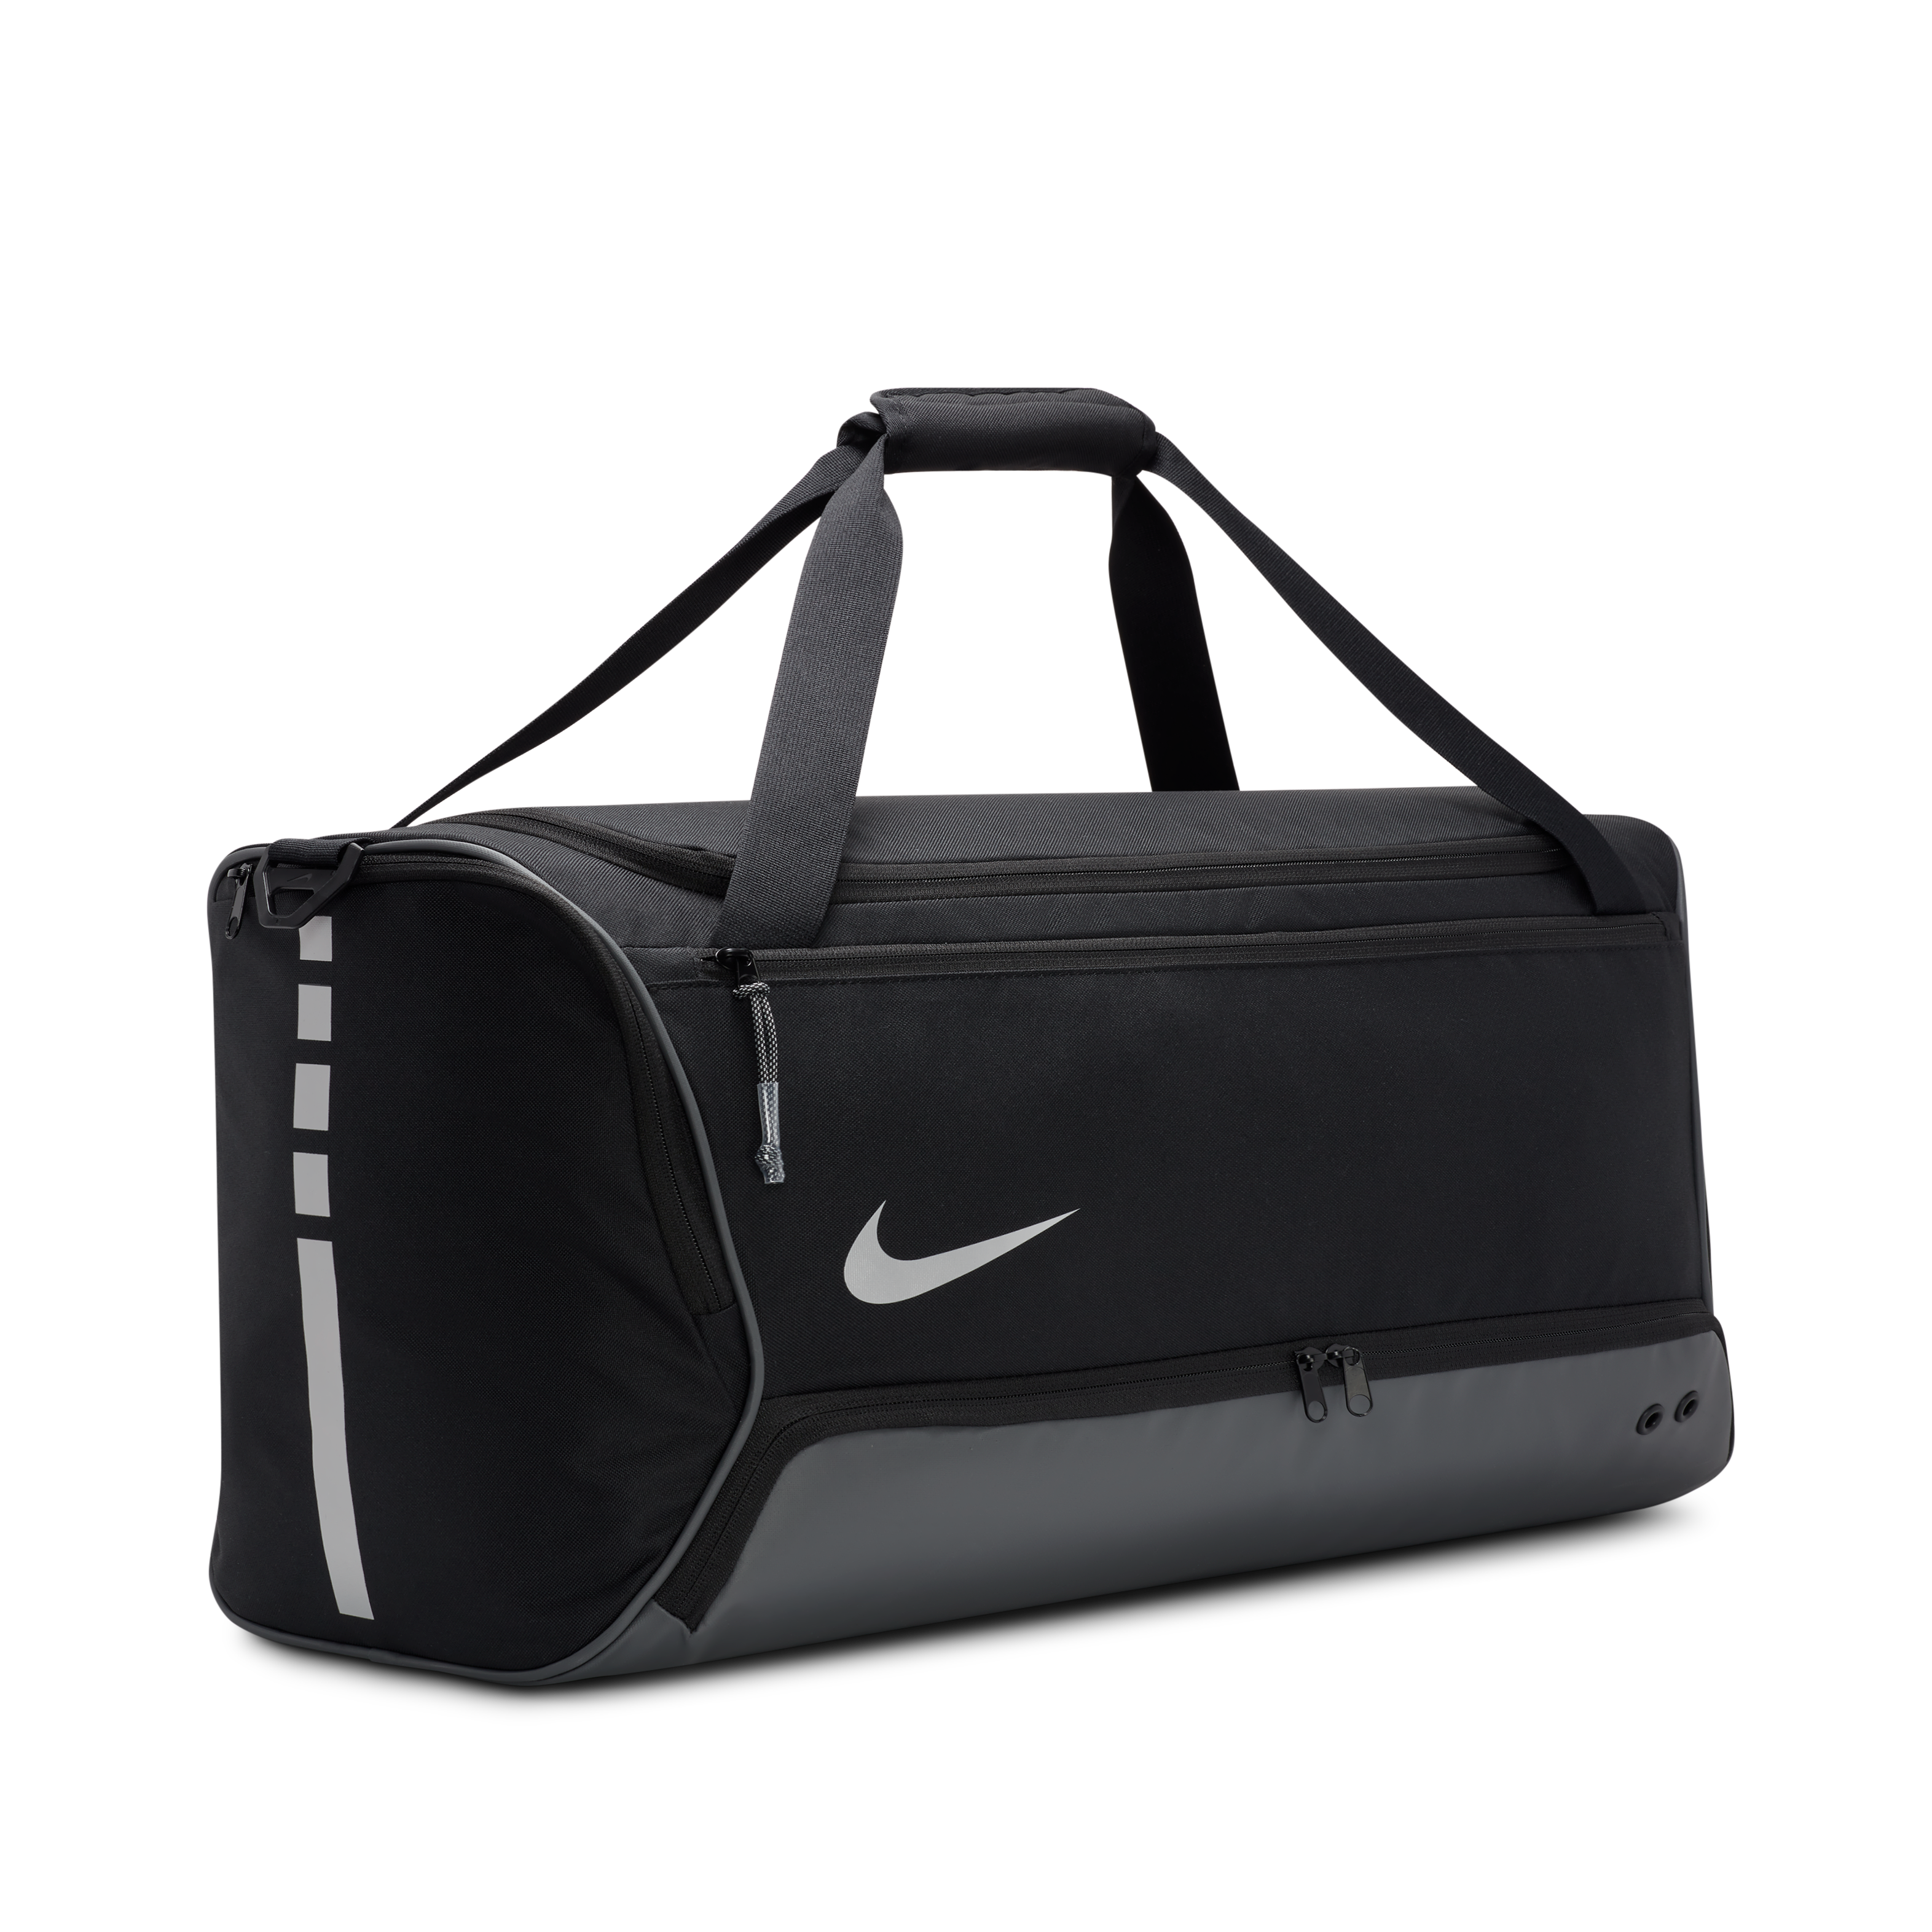 Hoops Elite Basketball Duffel Bag (57L) from Nike